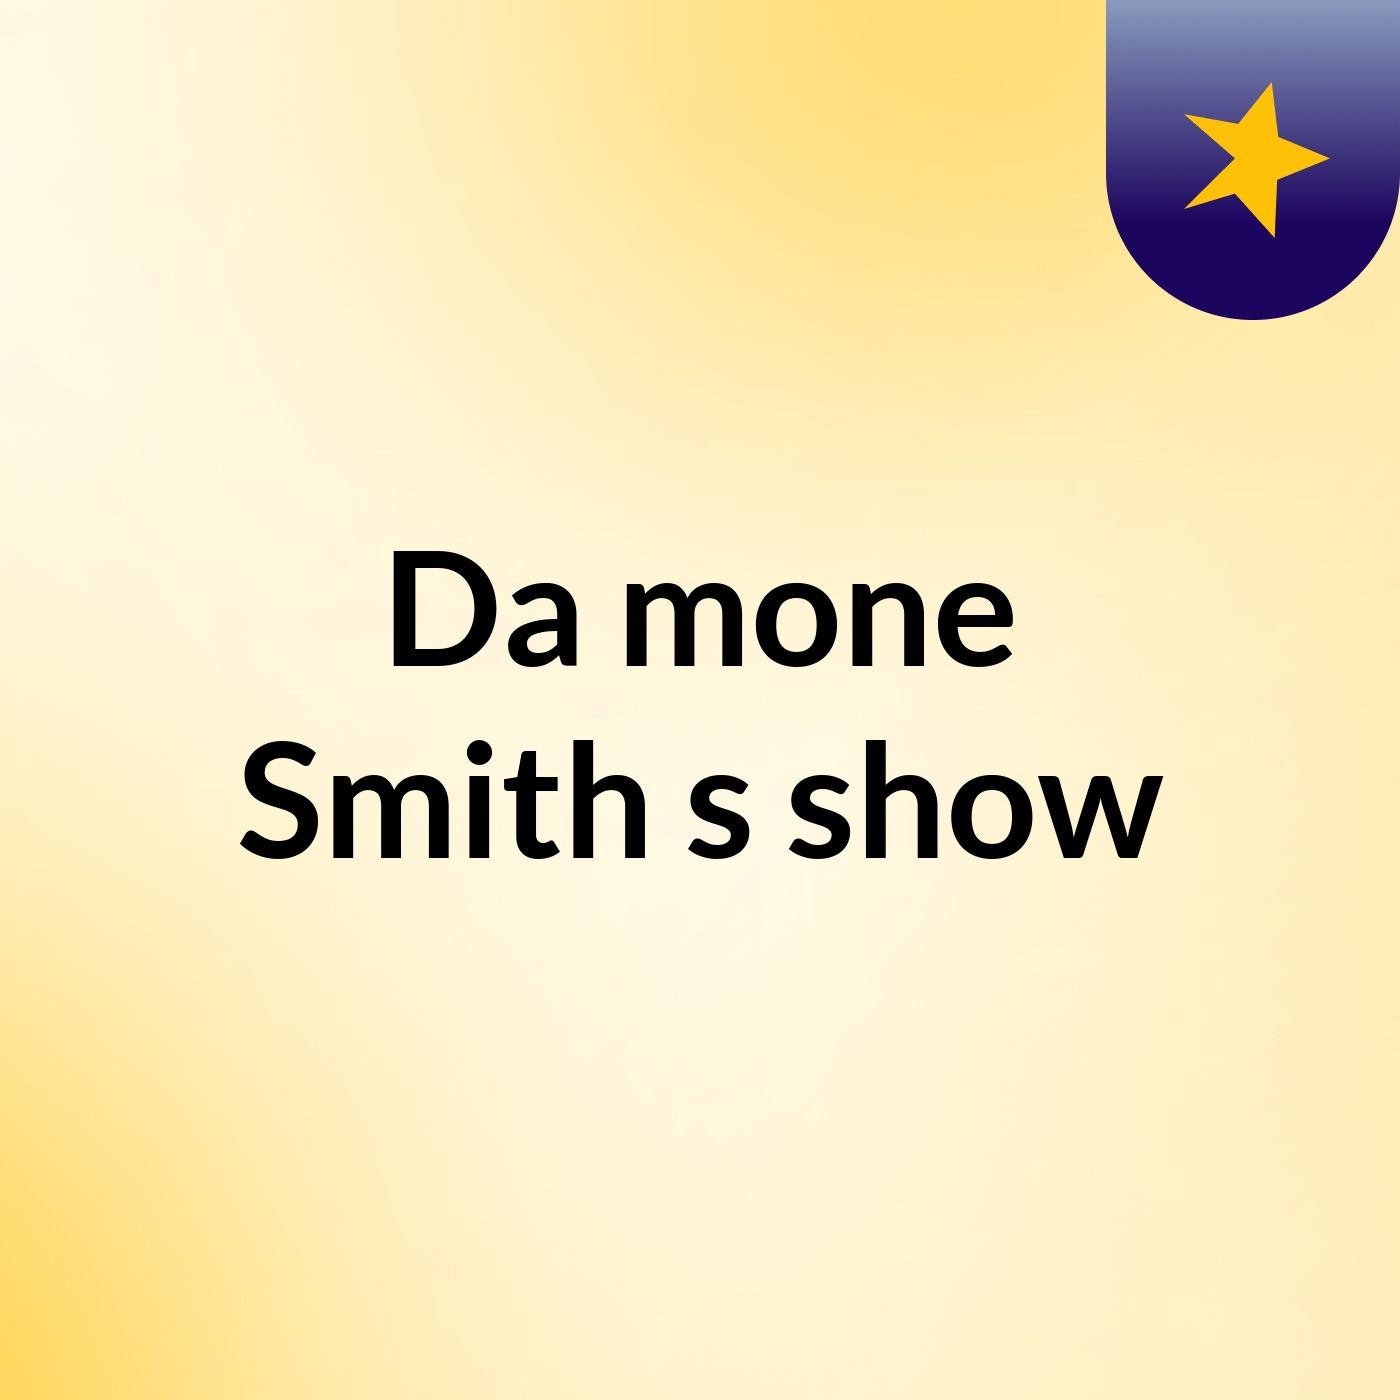 Da'mone Smith's show